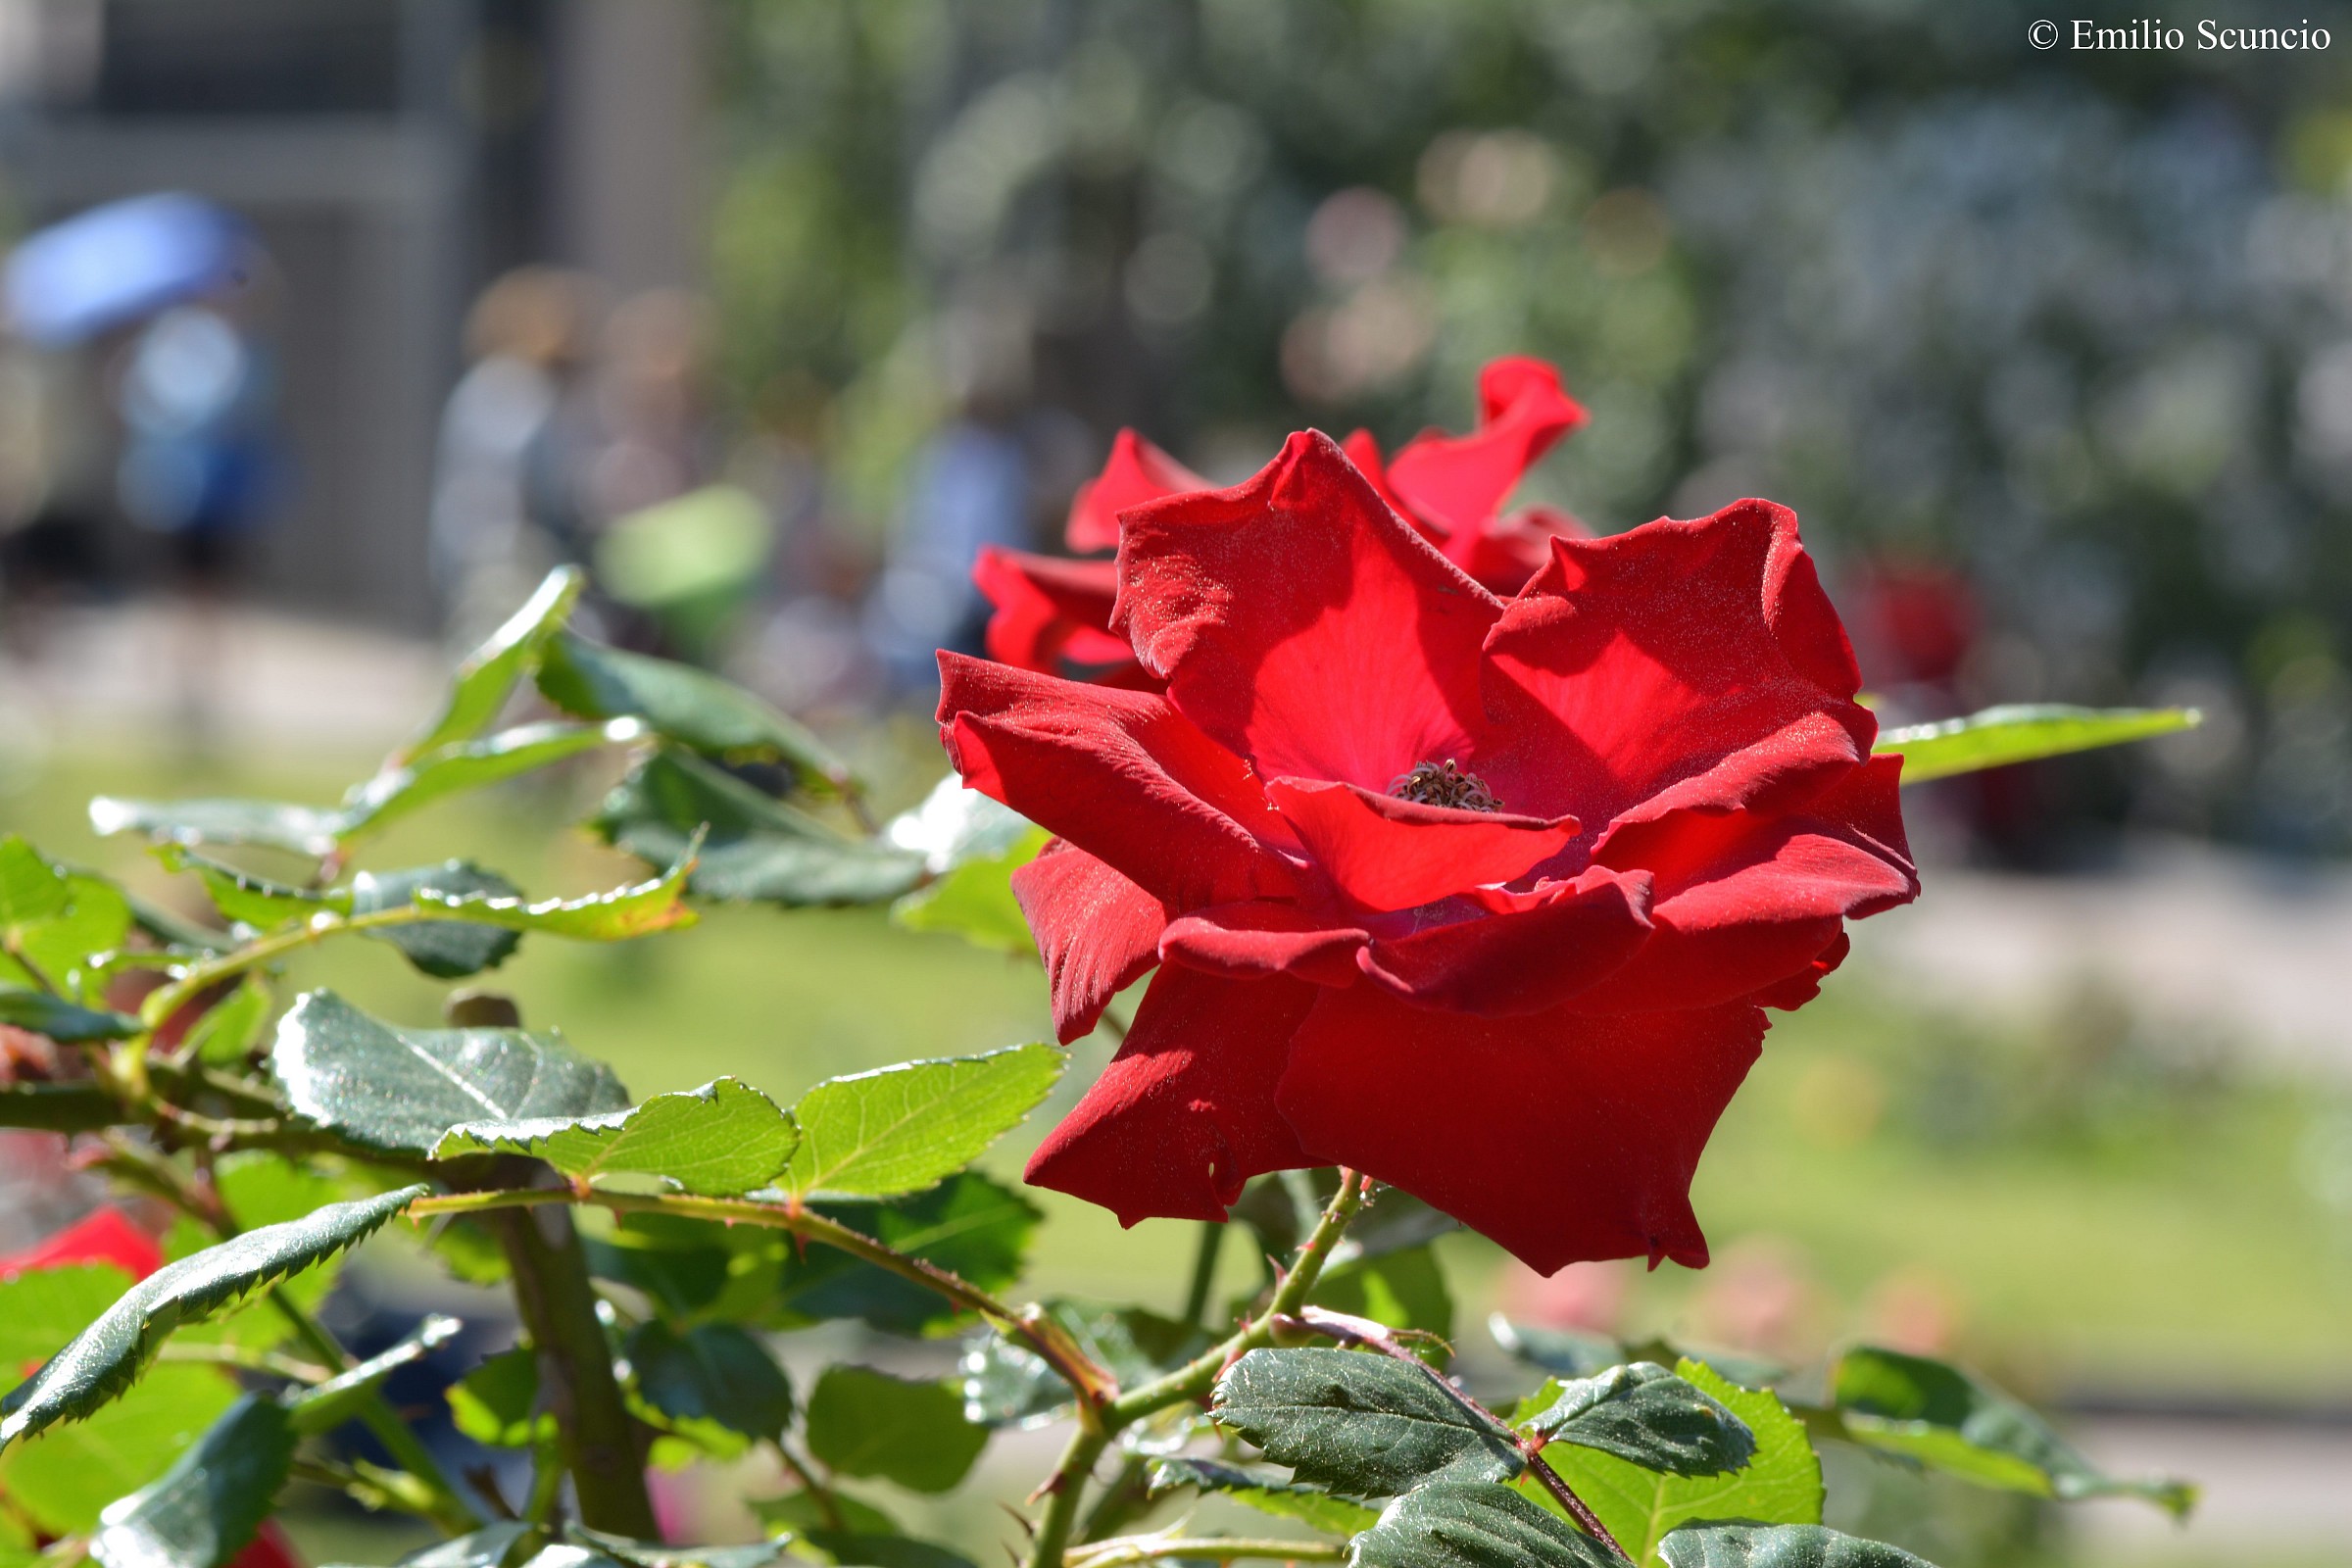 Rosa municipal rose garden Rome...